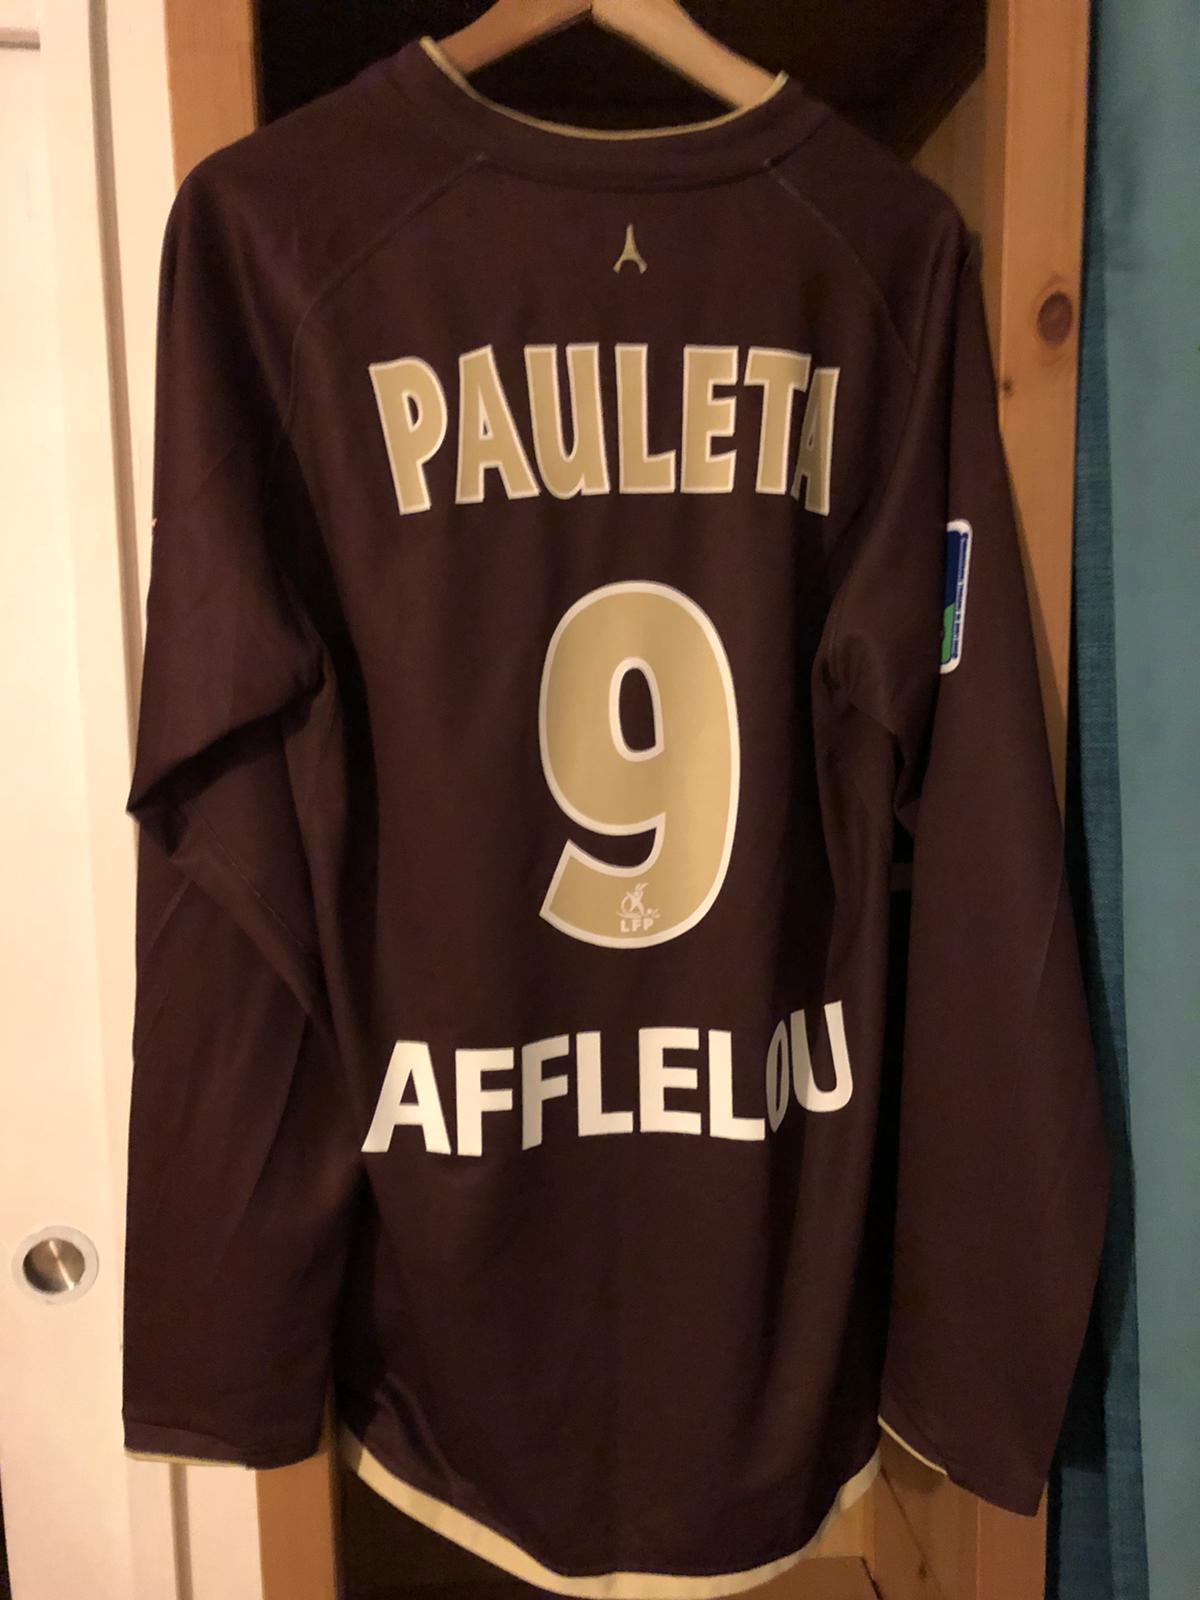 2006-07 PSG 3rd L/S No.9 PAULETA Player Issue League 1 Shirt Jersey Trikot